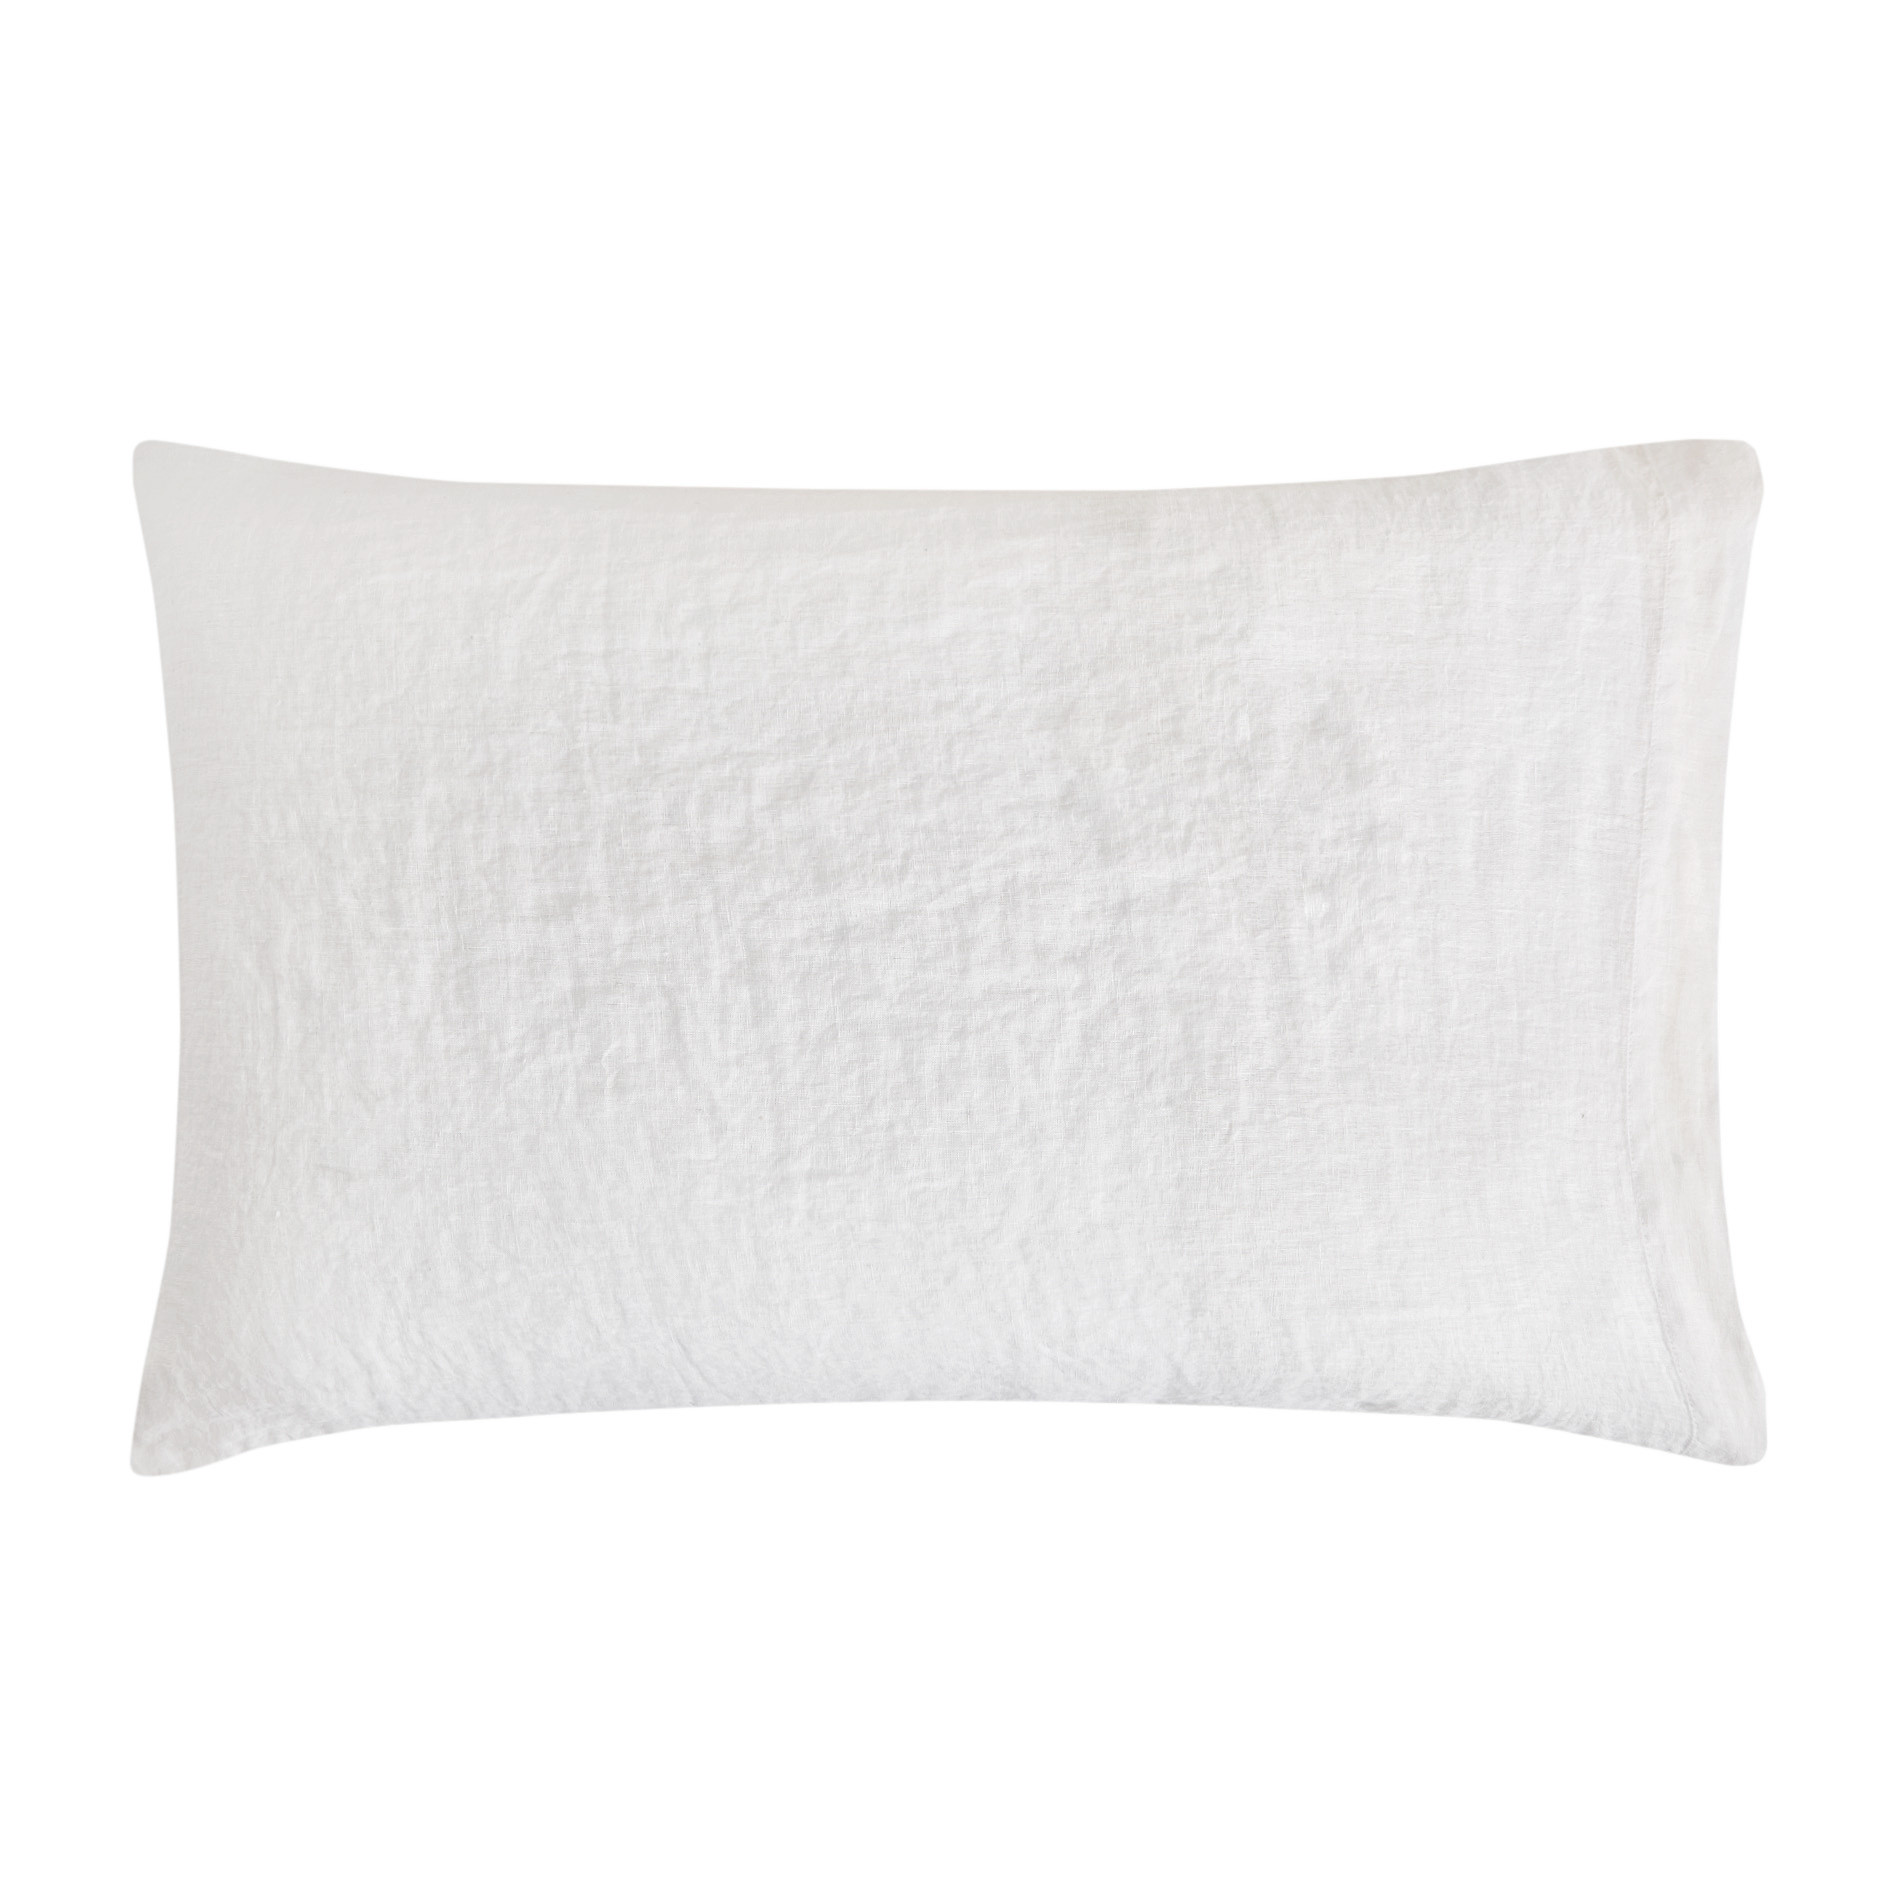 Plain pillowcase in 145 g linen, White 1, large image number 0